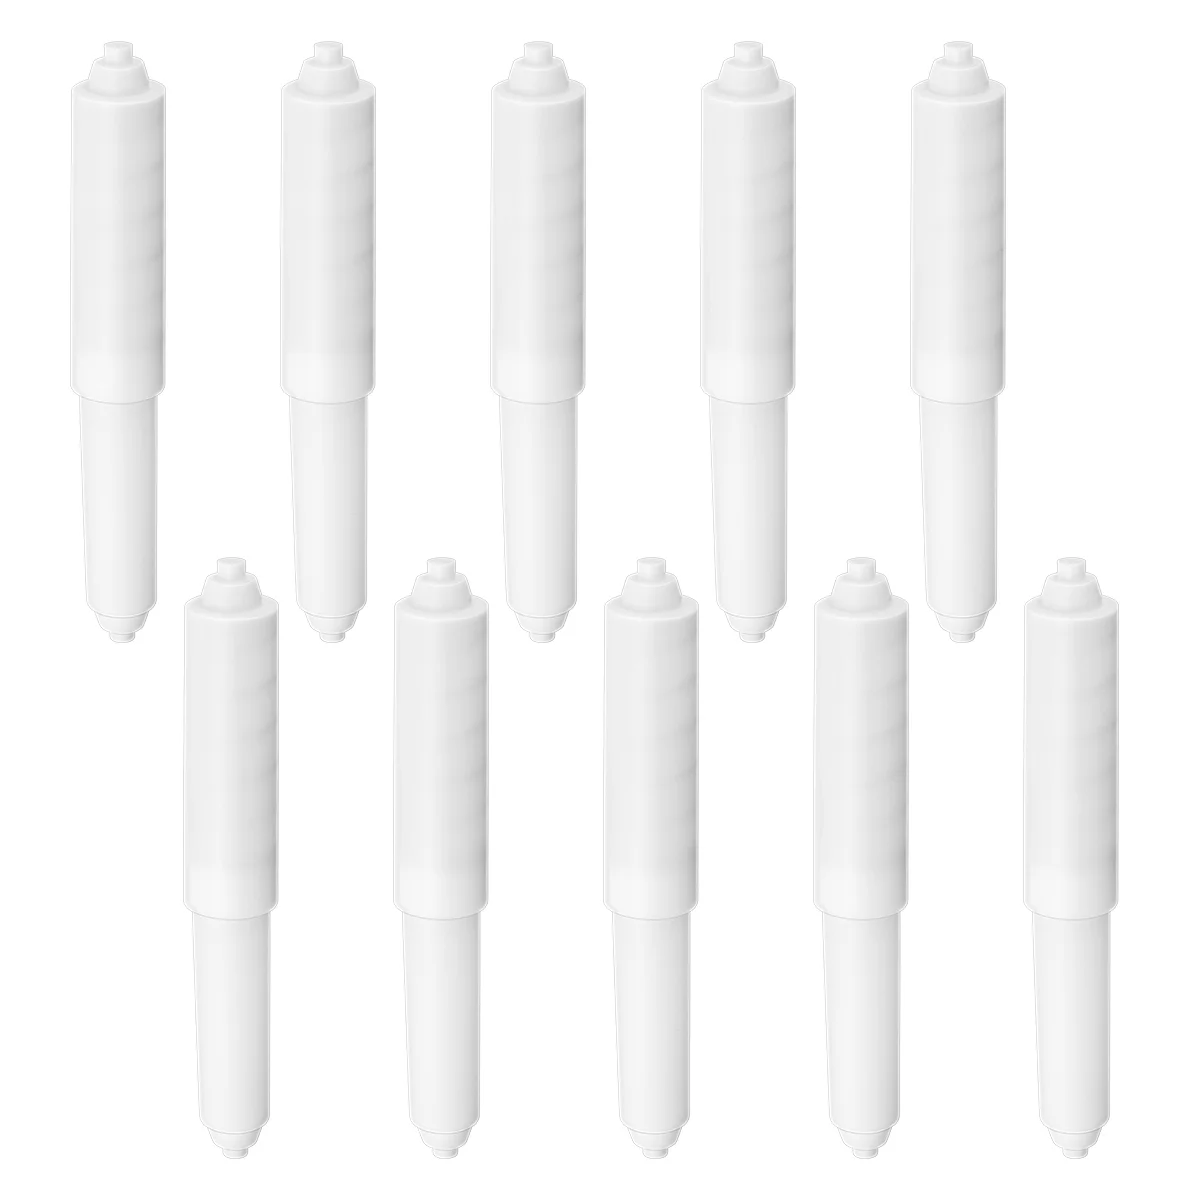 

BESTOMZ 10PCS Toilet Paper Roller Fit-All Style Plastic Spring Loaded White Toilet Paper Roller Bathroom Paper Holder